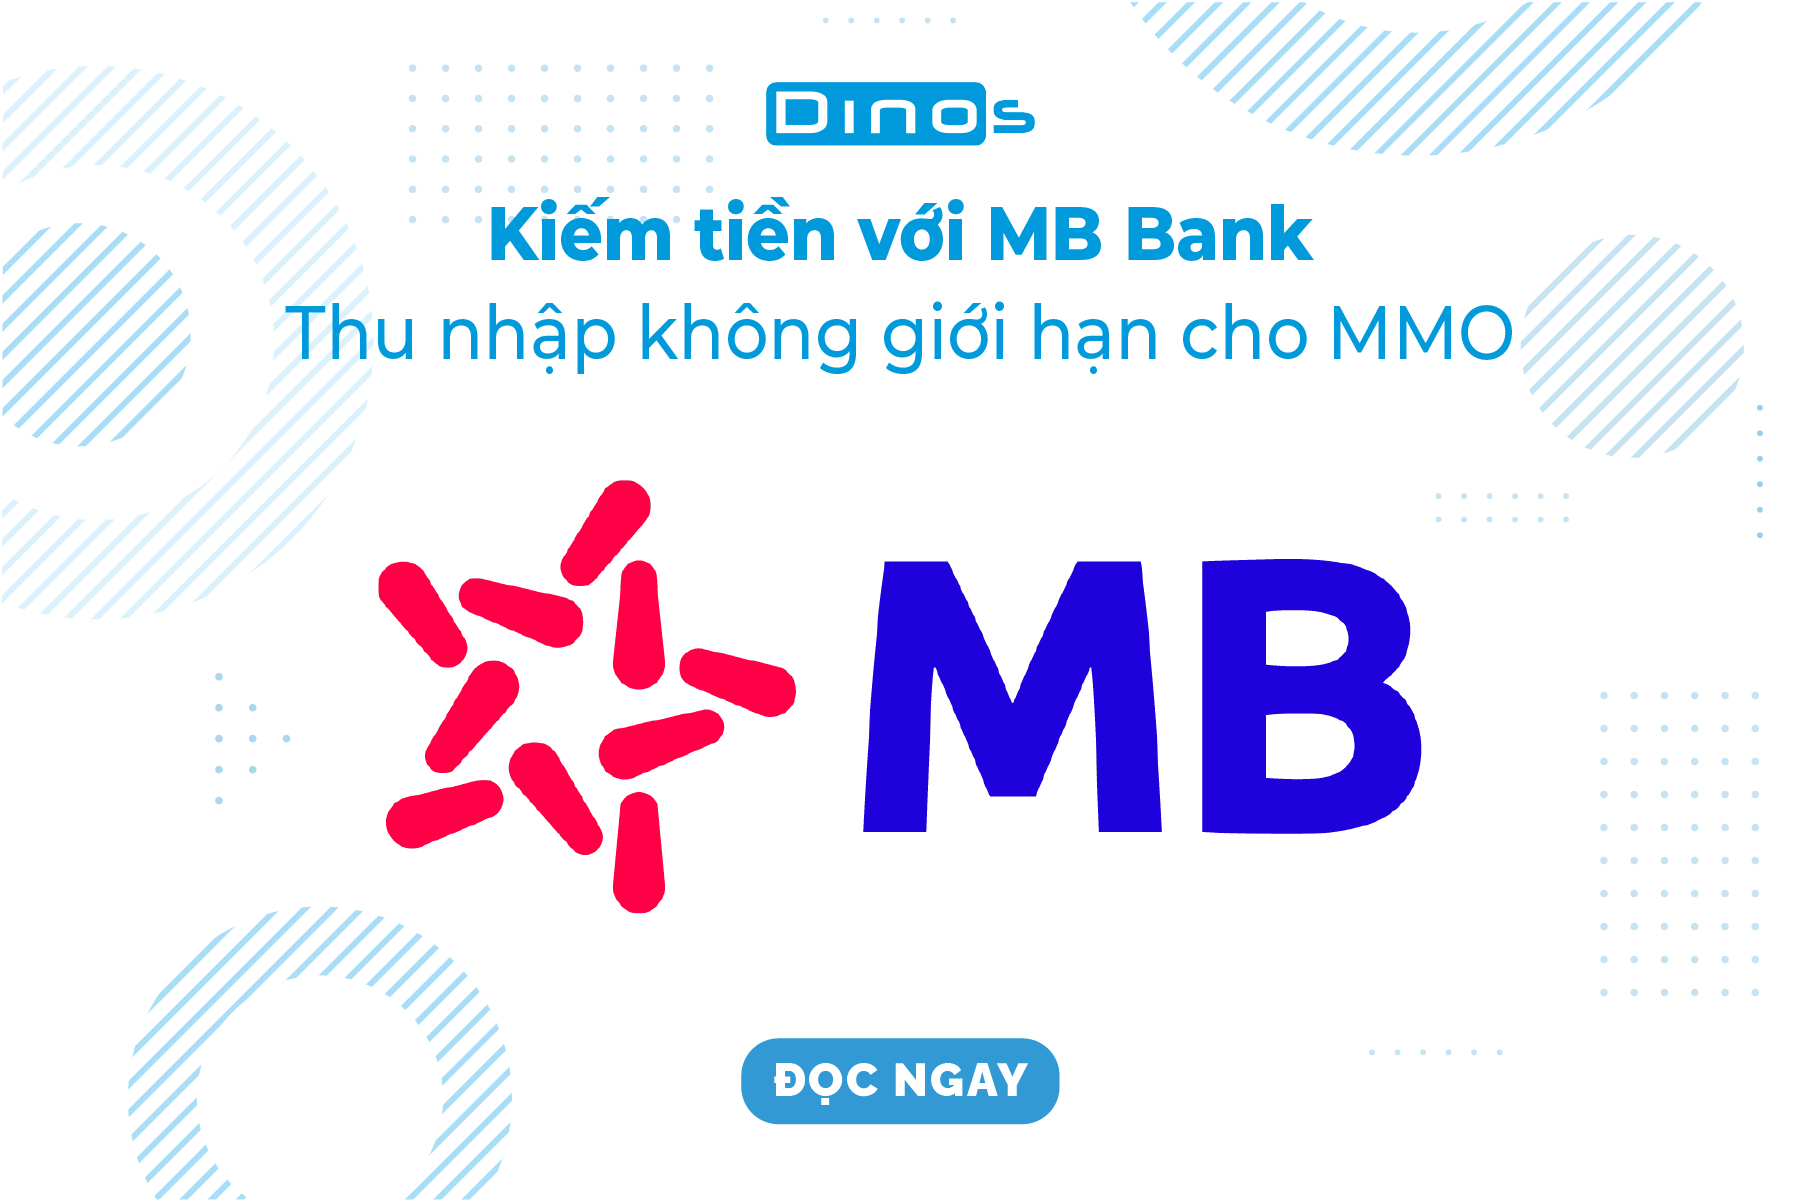 Kiếm tiền với MB Bank